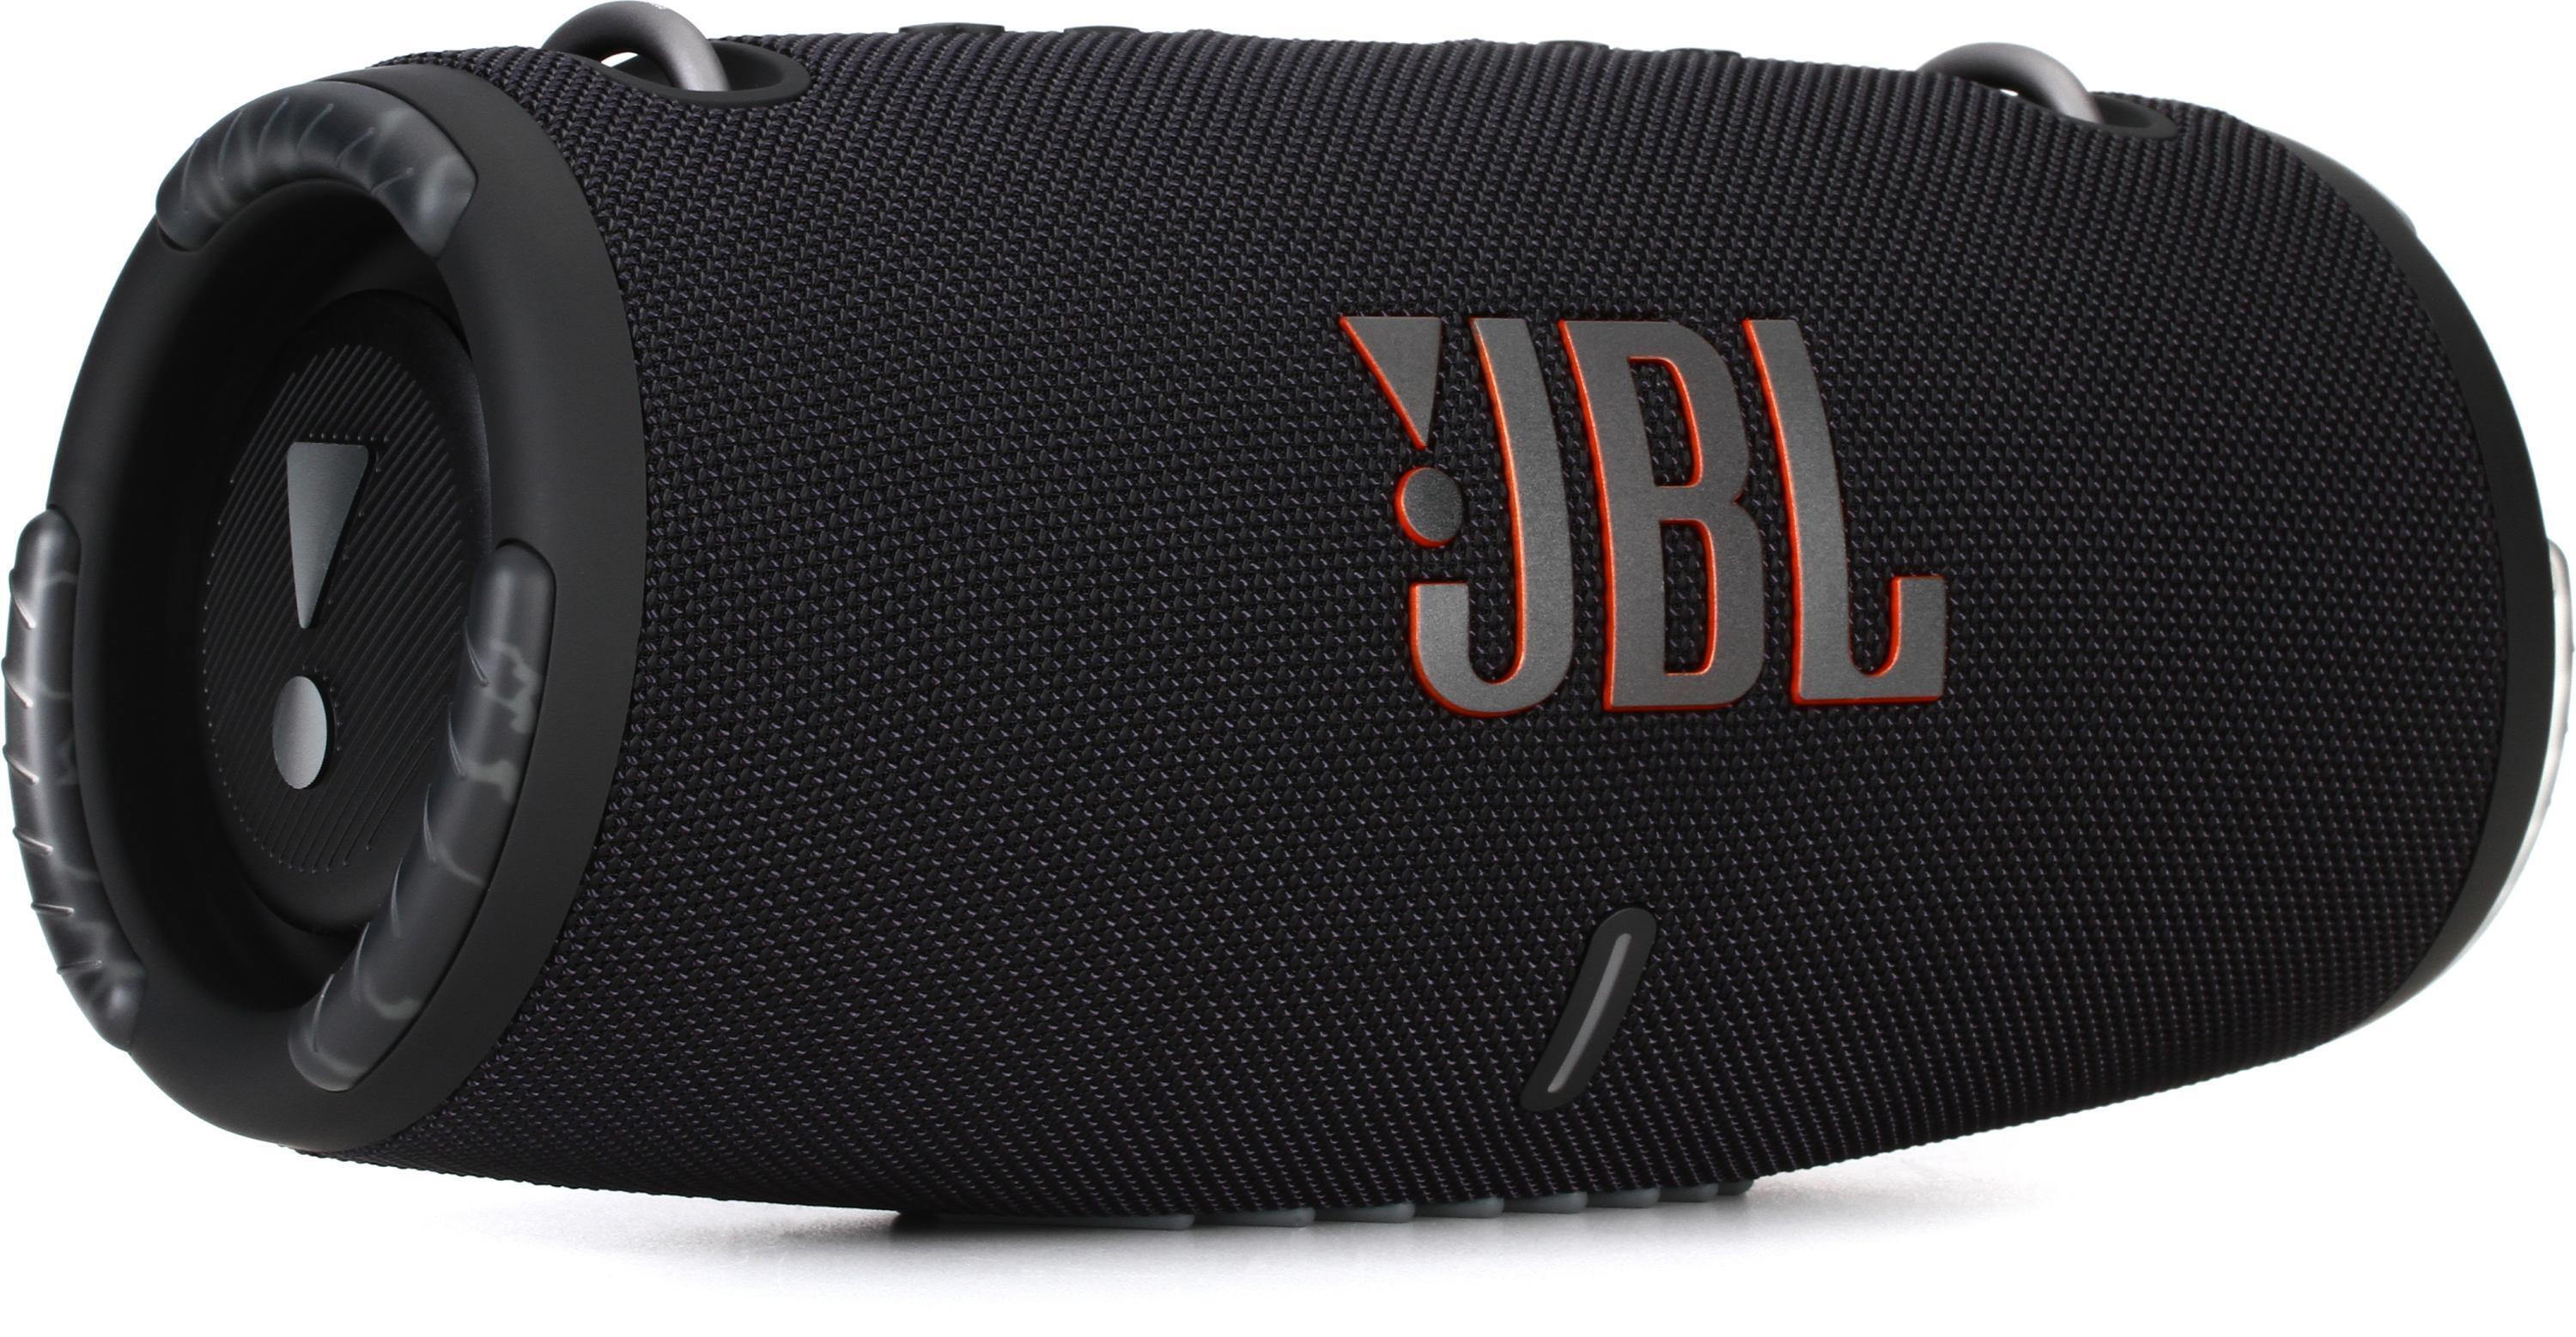 JBL Xtreme 3, Haut-parleur portable - Bluetooth